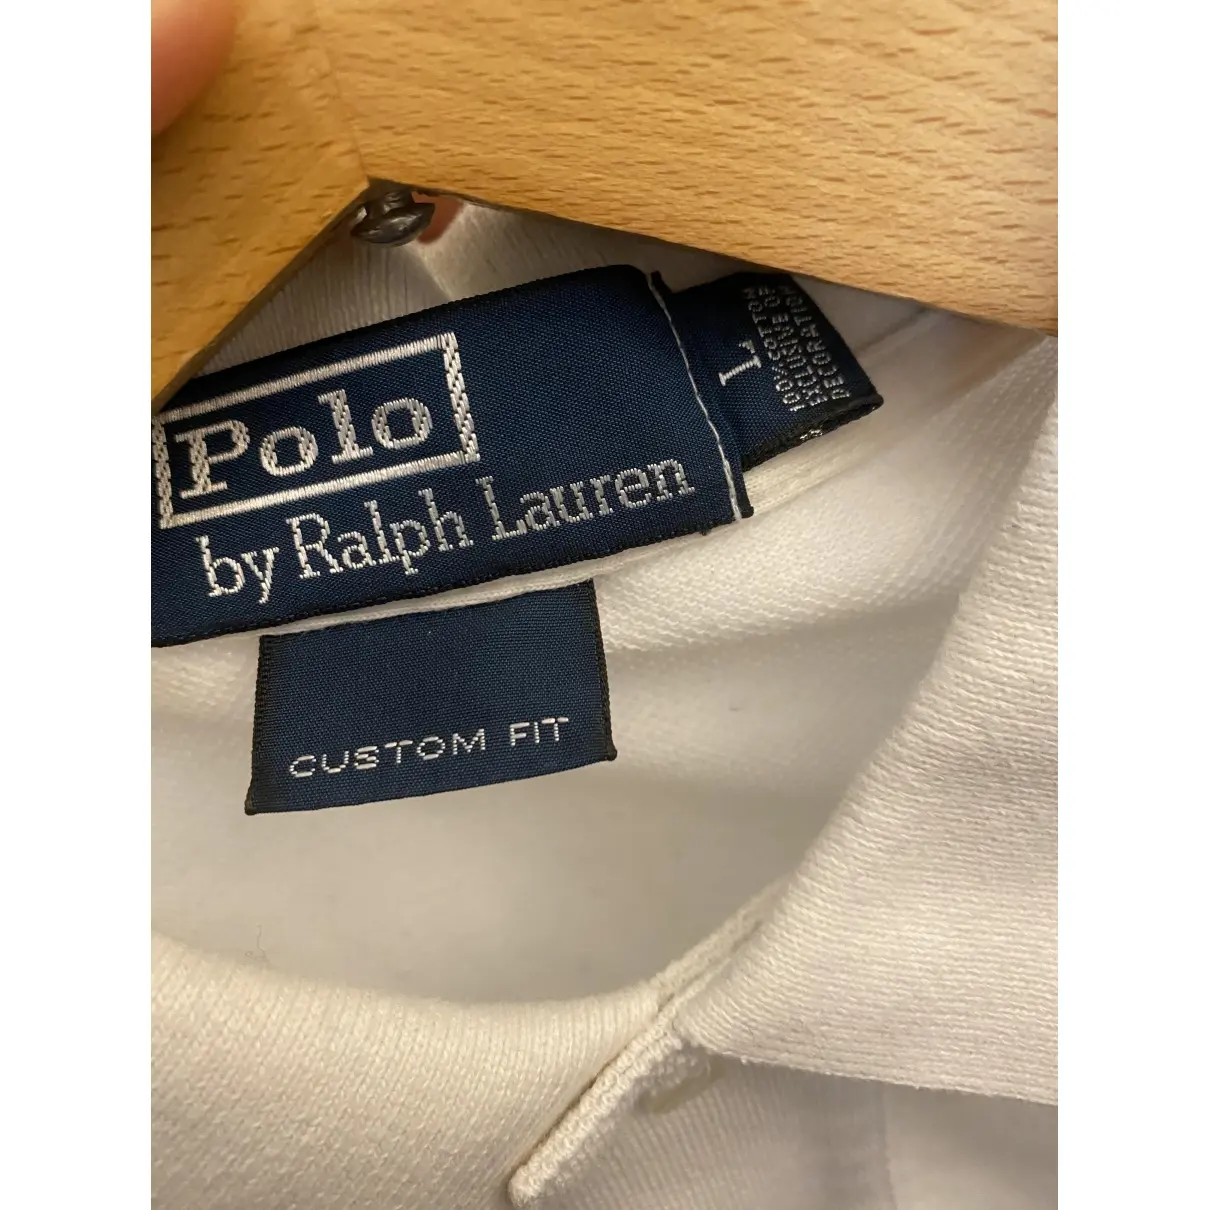 Buy Polo Ralph Lauren Polo classique manches longues polo shirt online